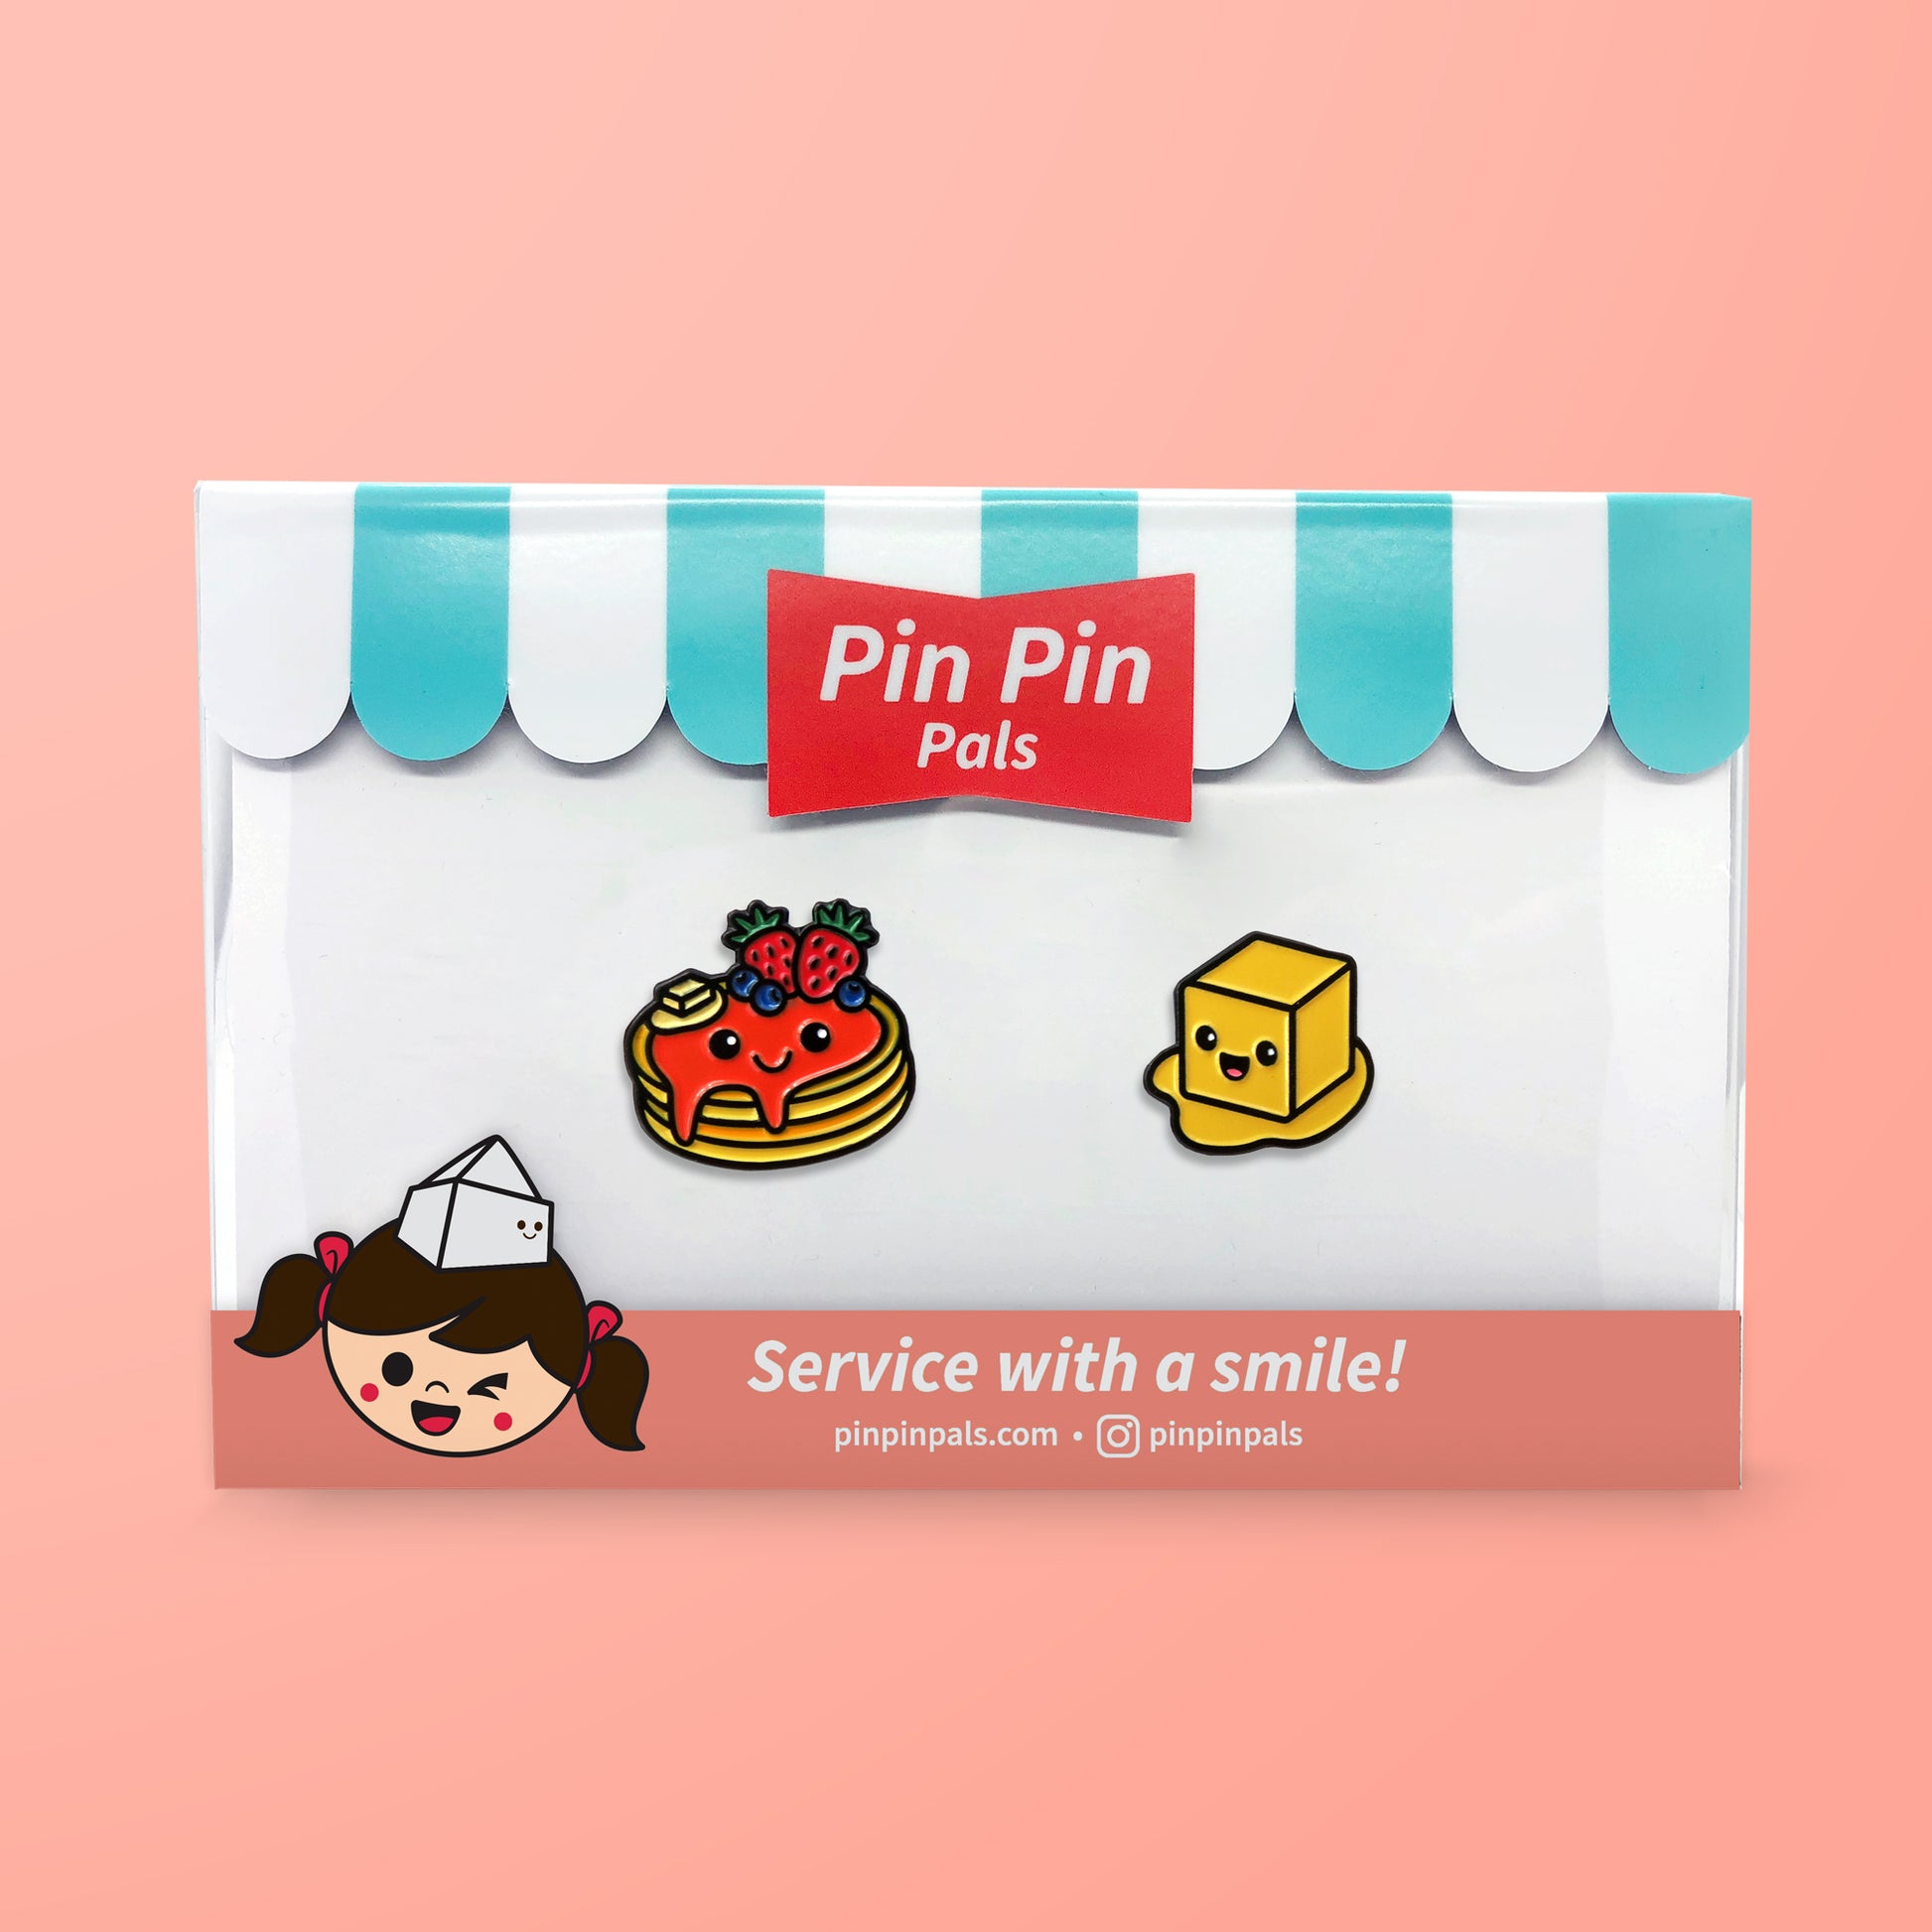 Pin Pin Pals Pancake and Butter enamel pin set in packaging box on pink background